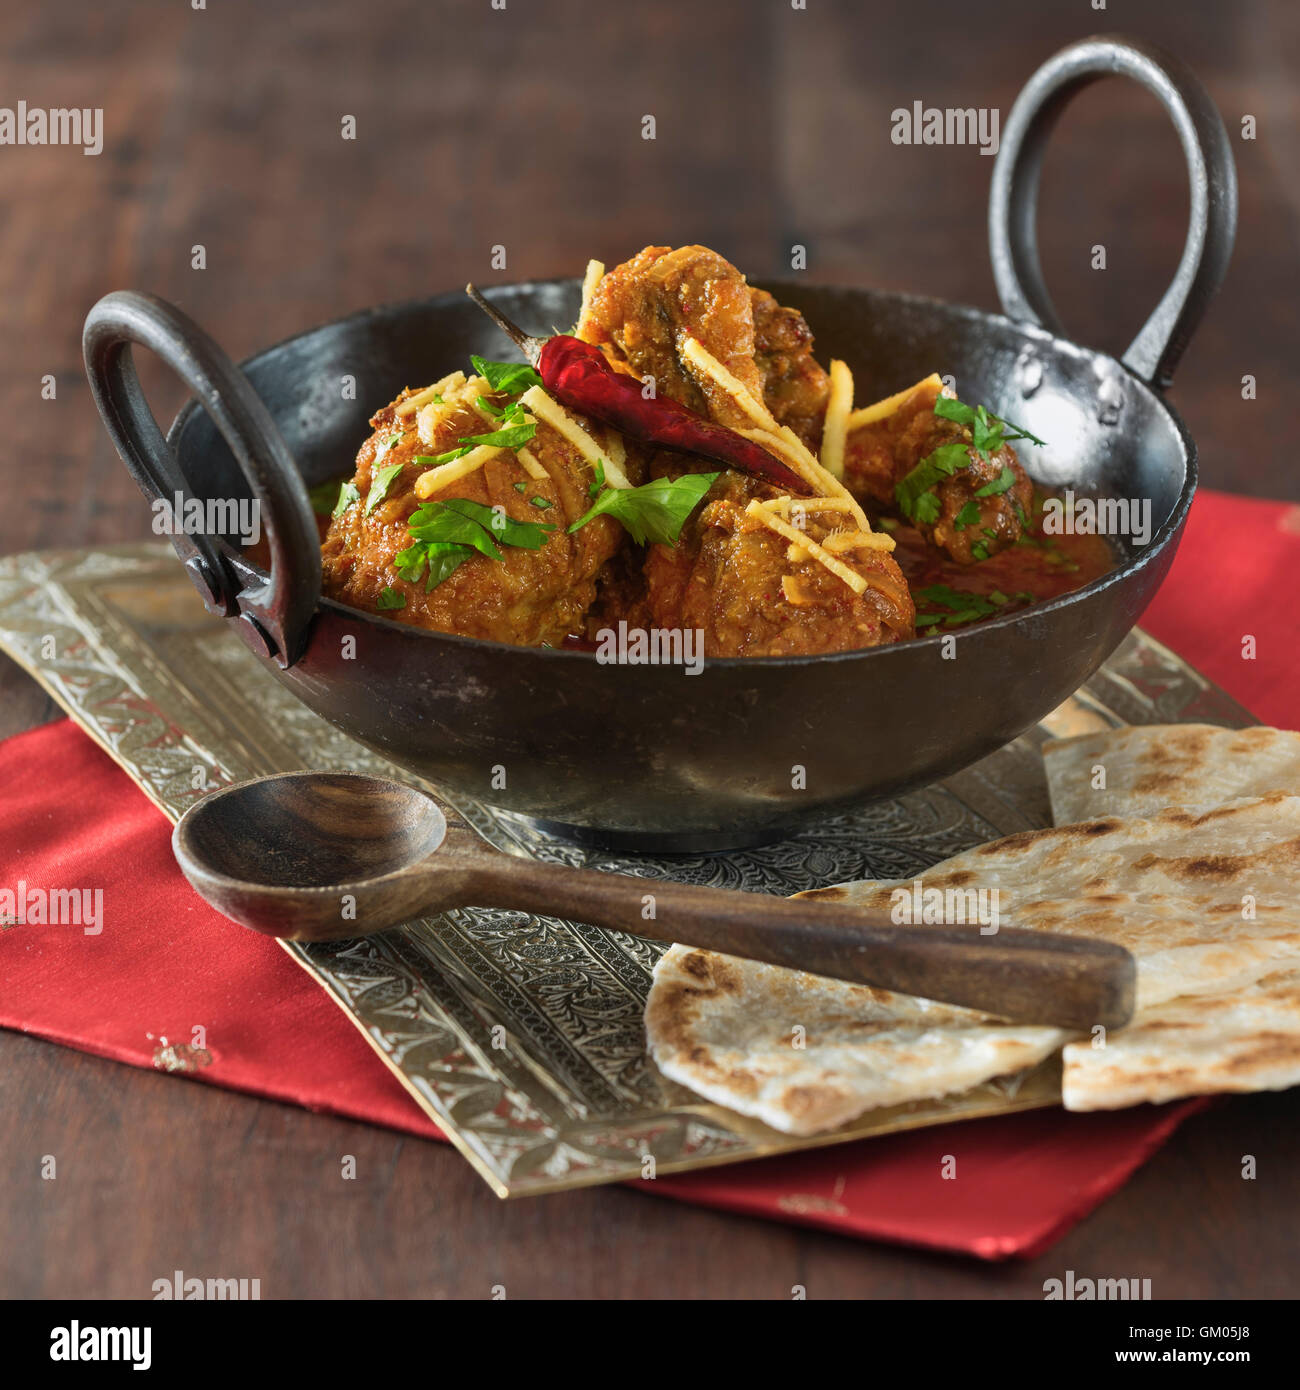 Kadai chicken. Karahi murgh. Food India Pakistan Stock Photo